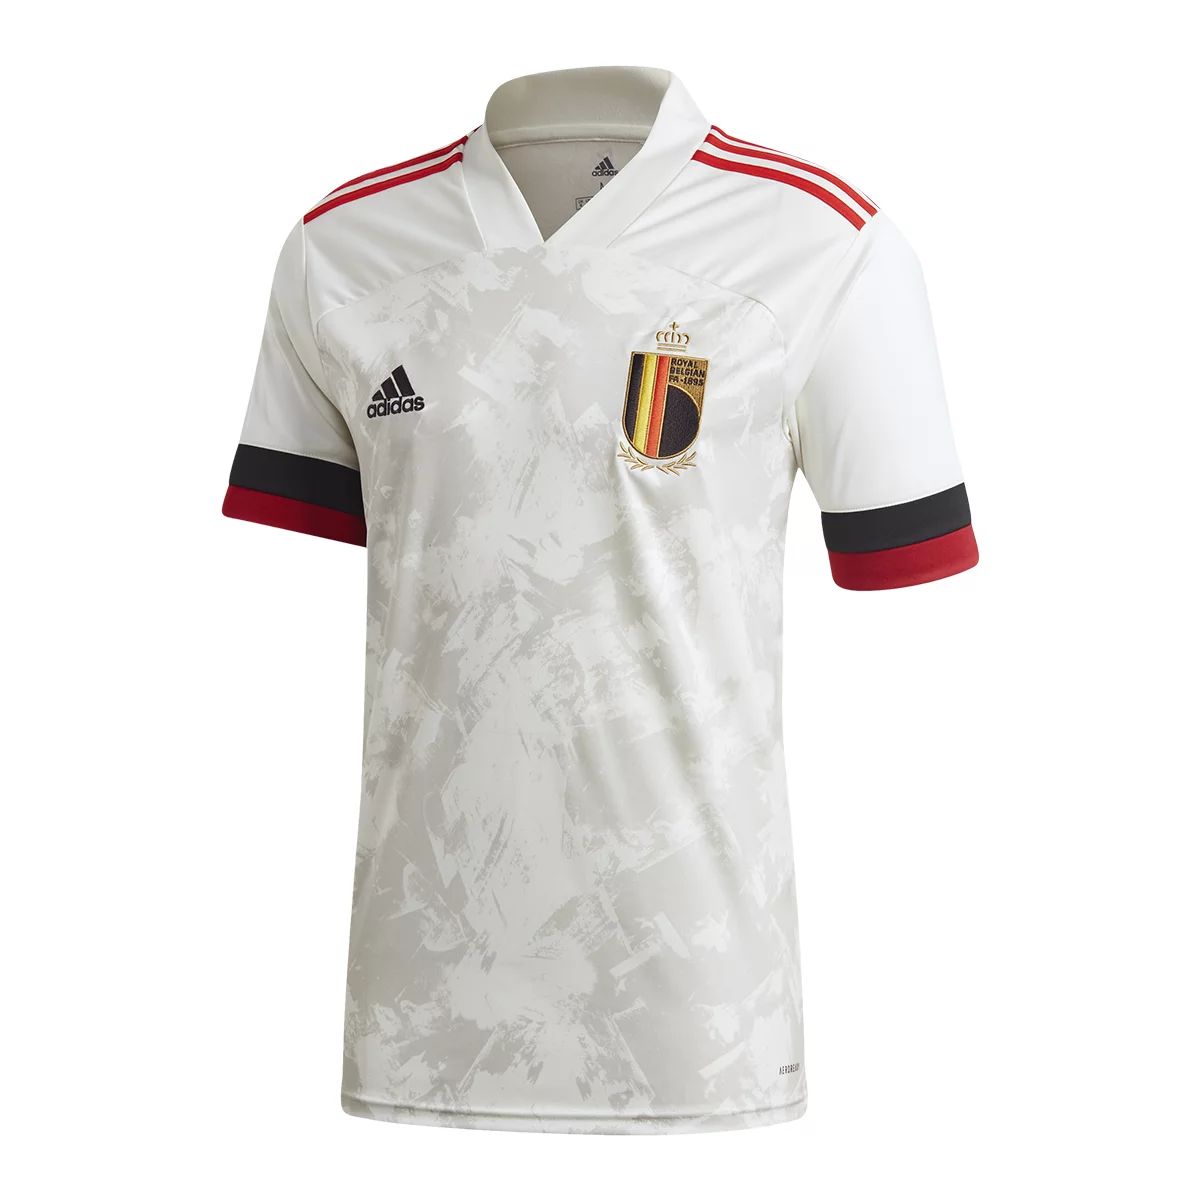 Belgium 2020 adidas Men's Replica Soccer Jersey, Football